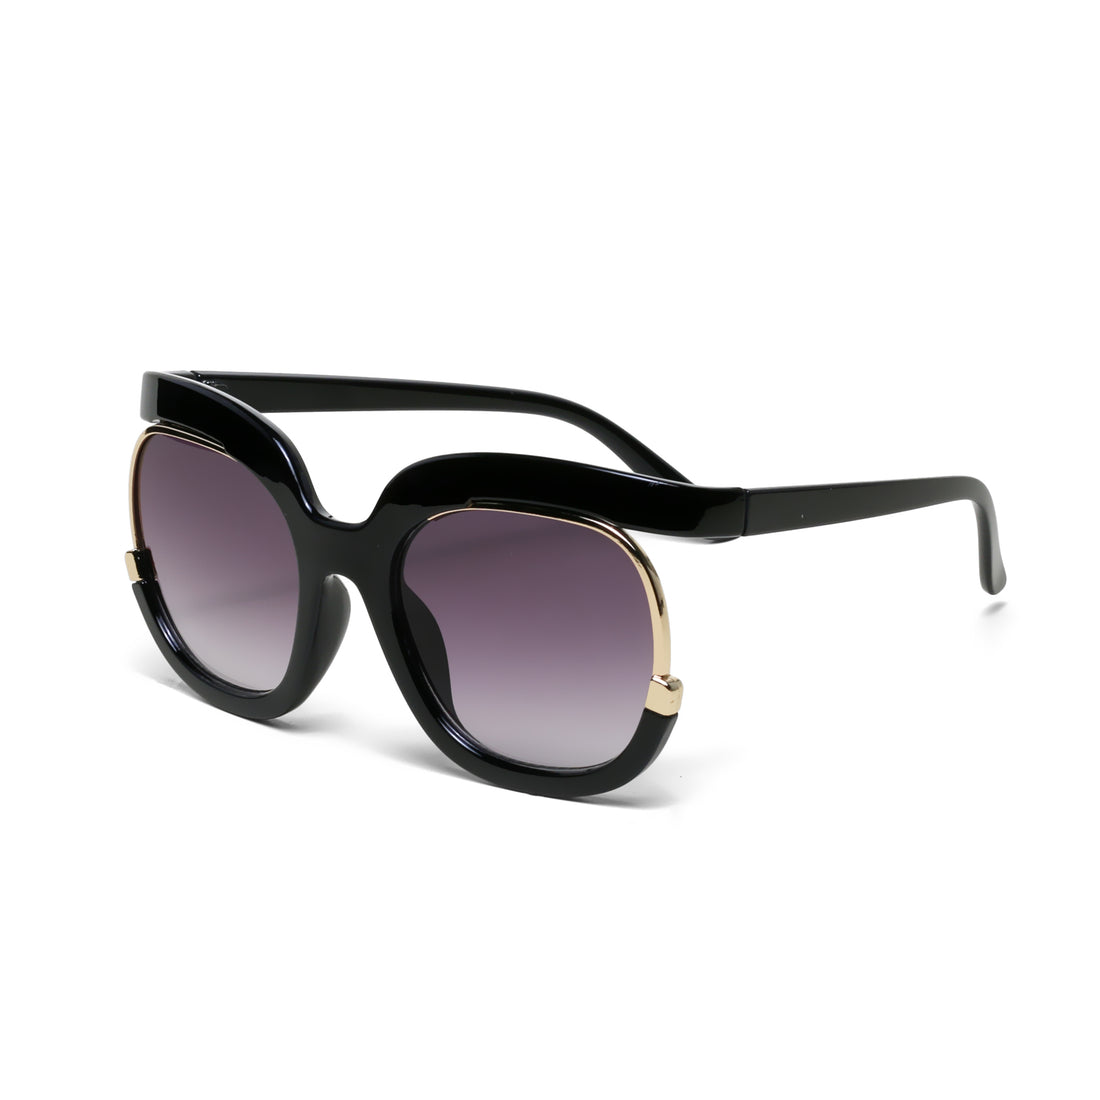 Ladybug Sunglasses